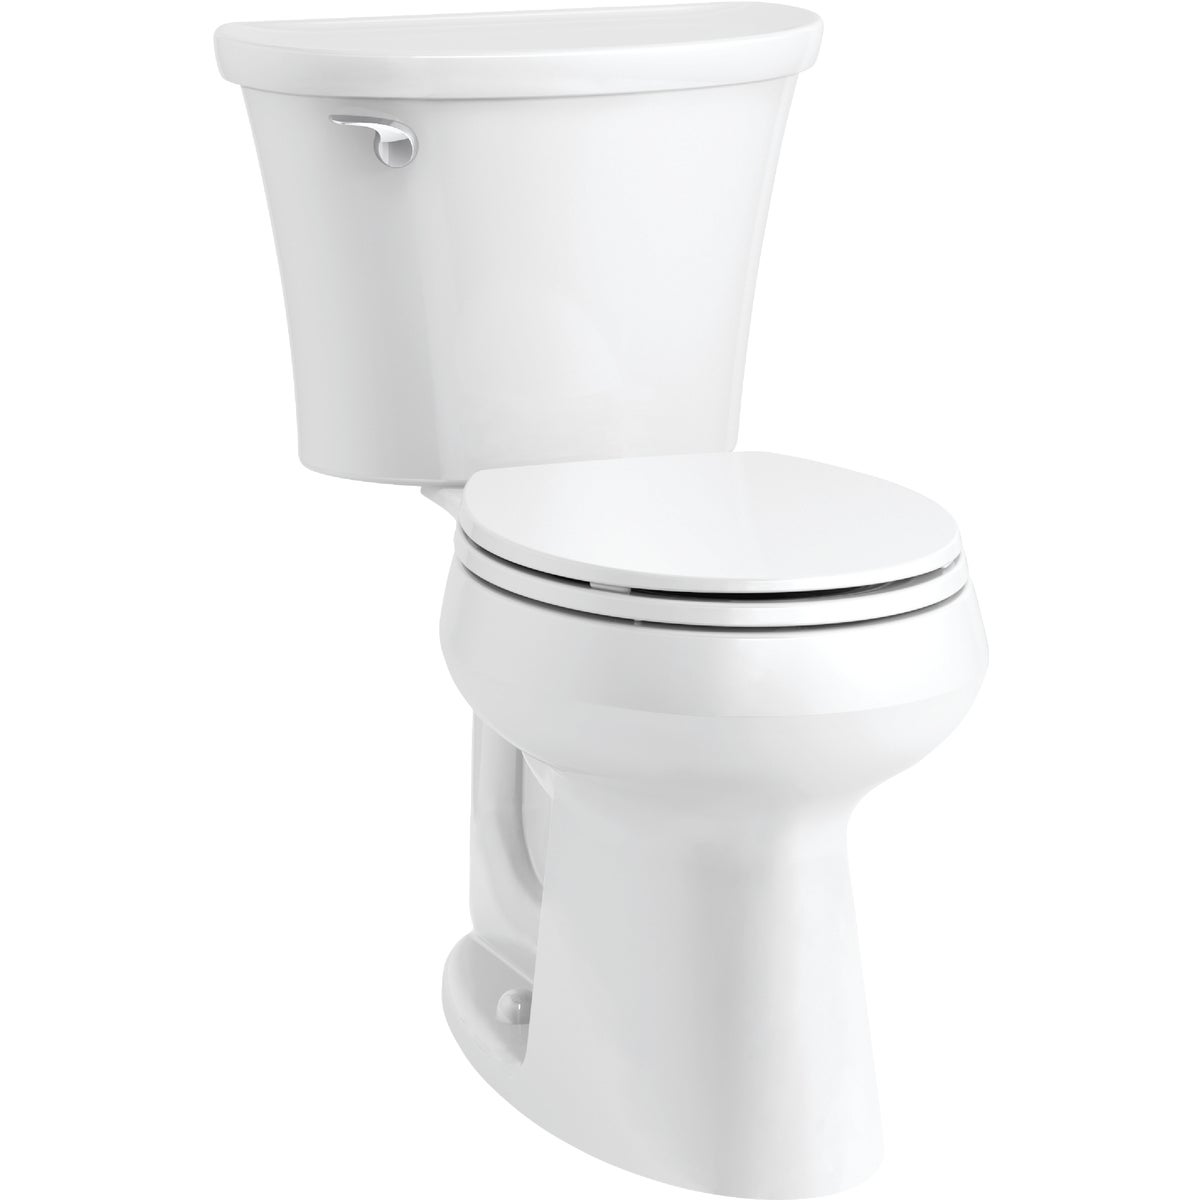 Kohler Cavata White Elongated Bowl 1.28 GPF Complete Solution Toilet